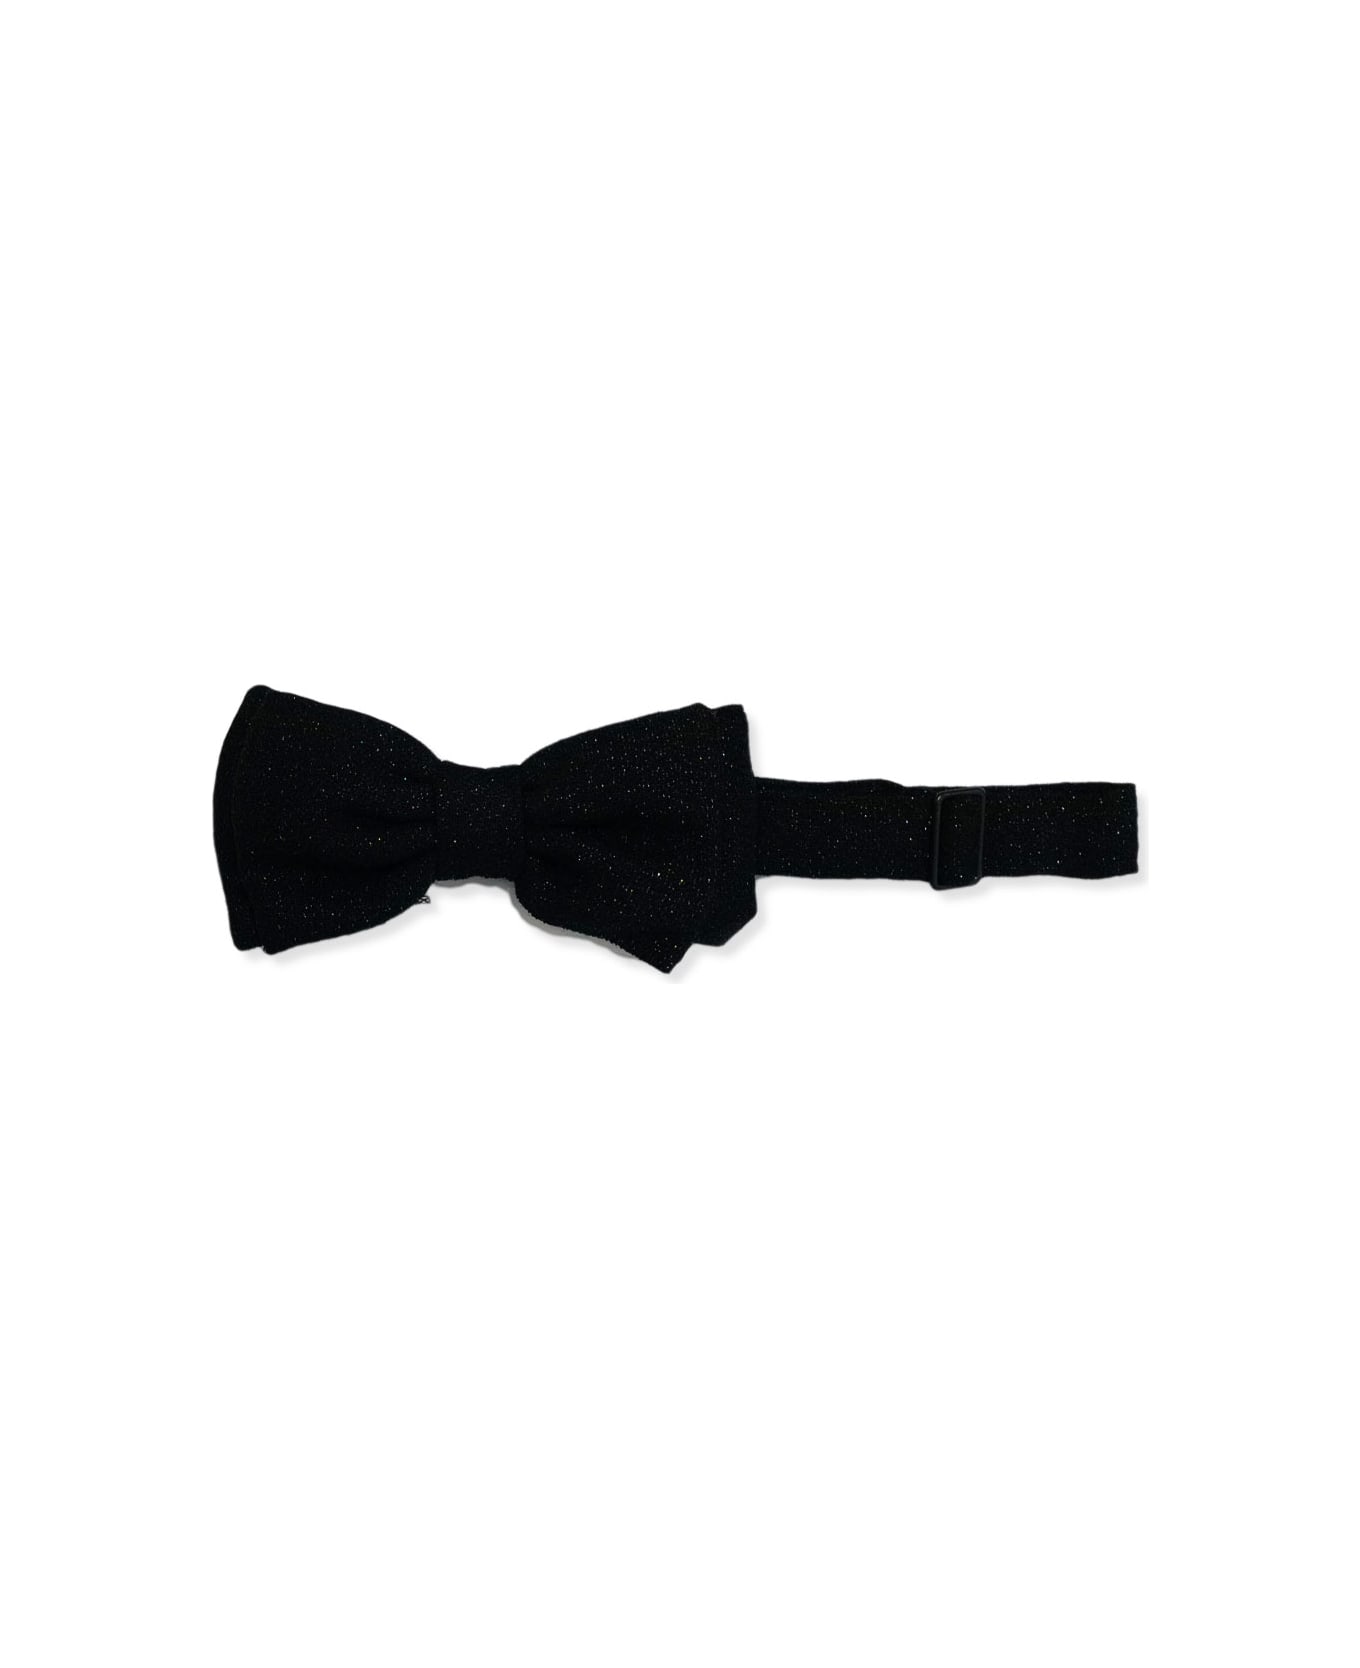 Lardini Bow Tie - Black ネクタイ